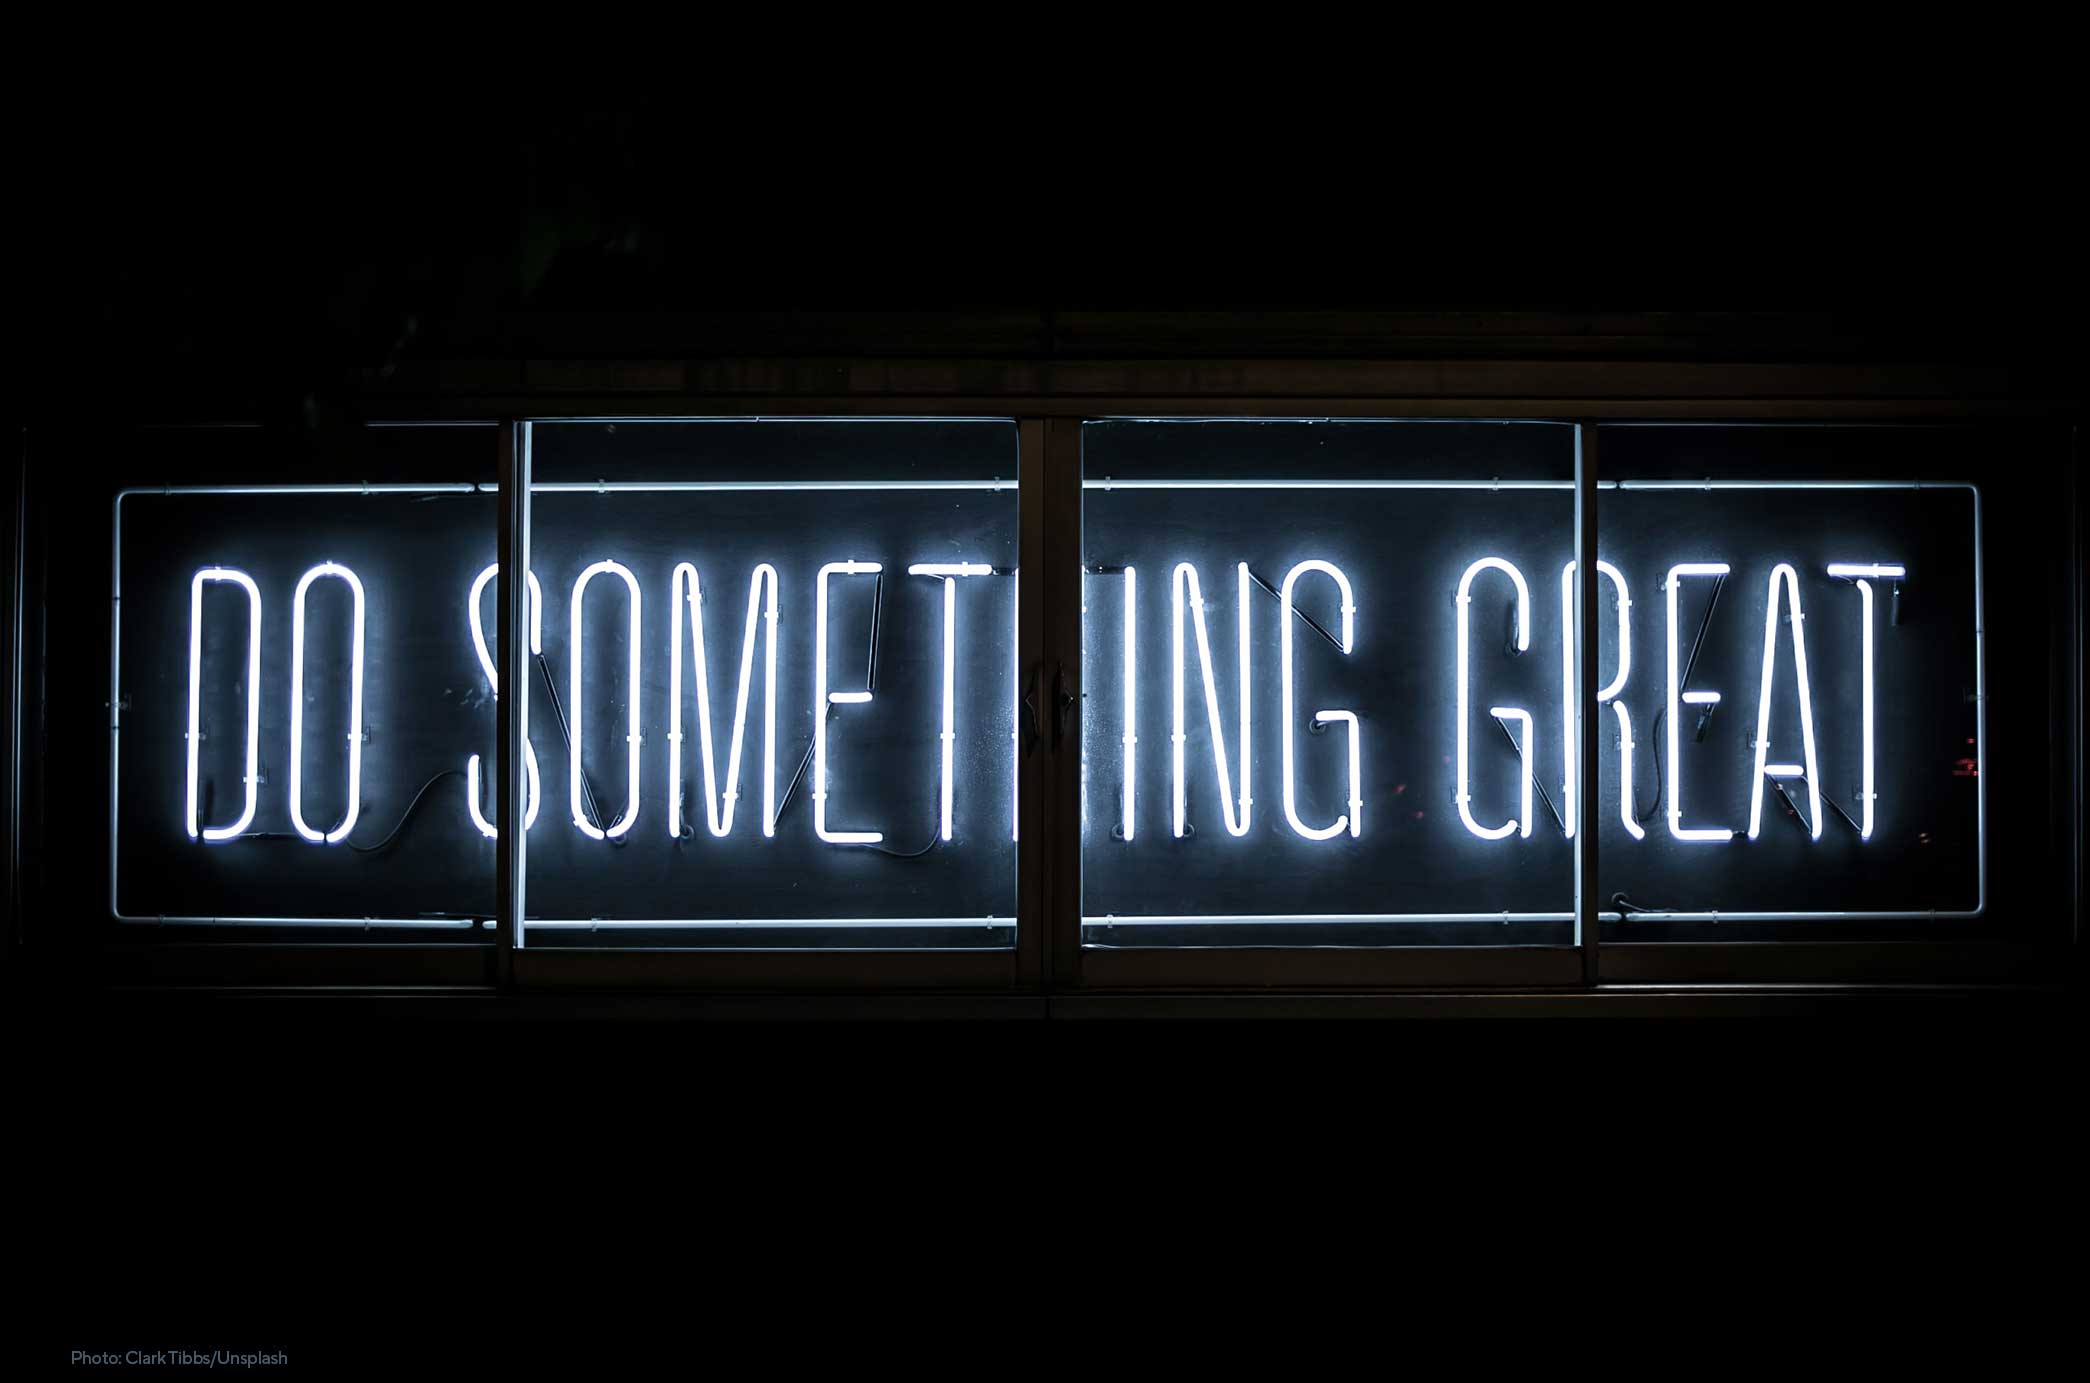 Neon lights spelling “Do Something Great”